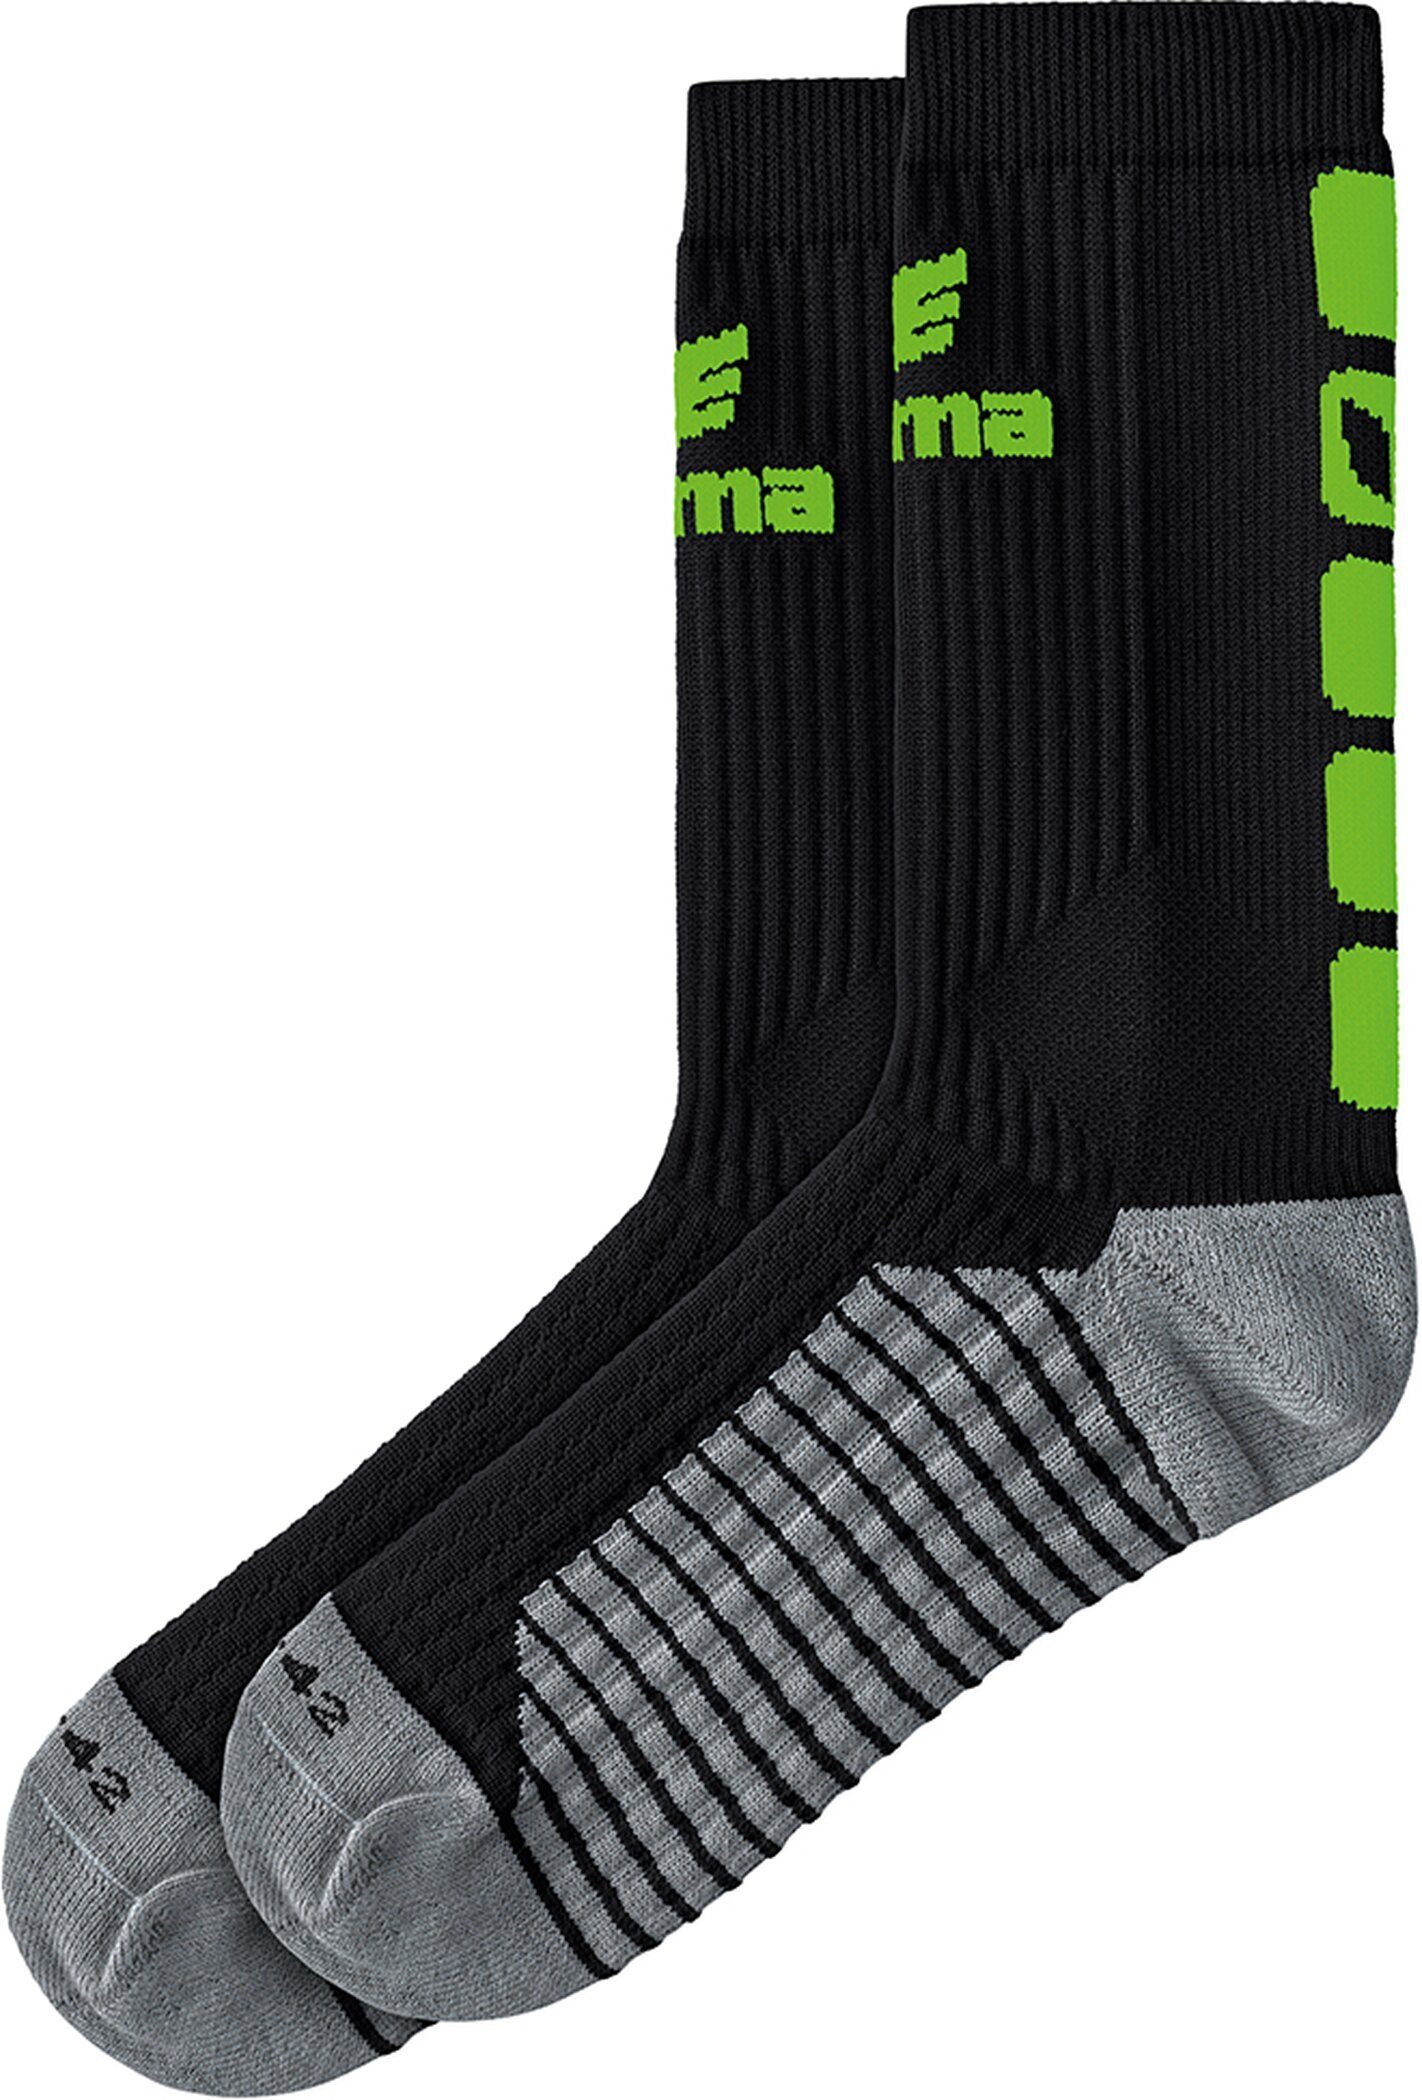 black/green socks Sportsocken gecko 5-C Erima